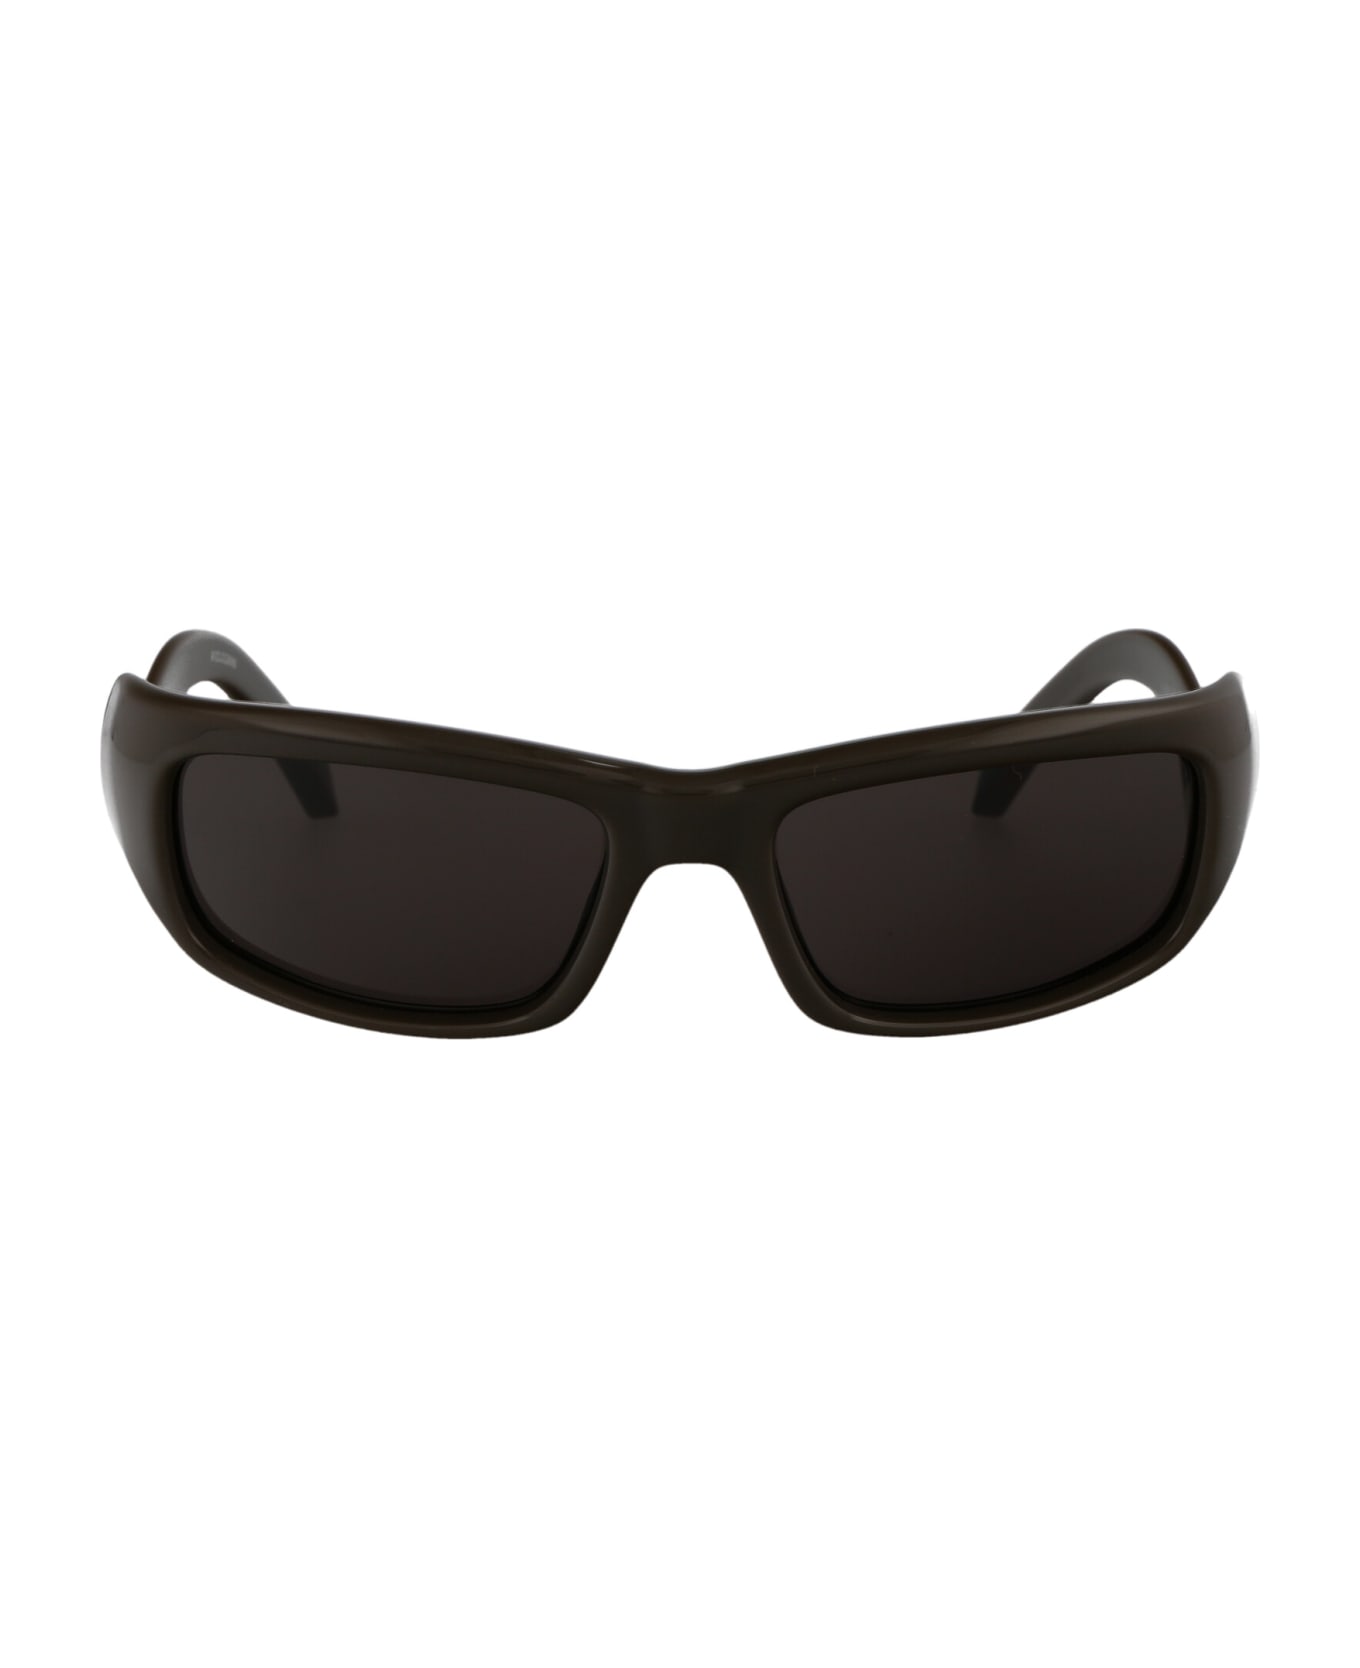 Balenciaga Eyewear Bb0320s Sunglasses - 004 BROWN BROWN GREY